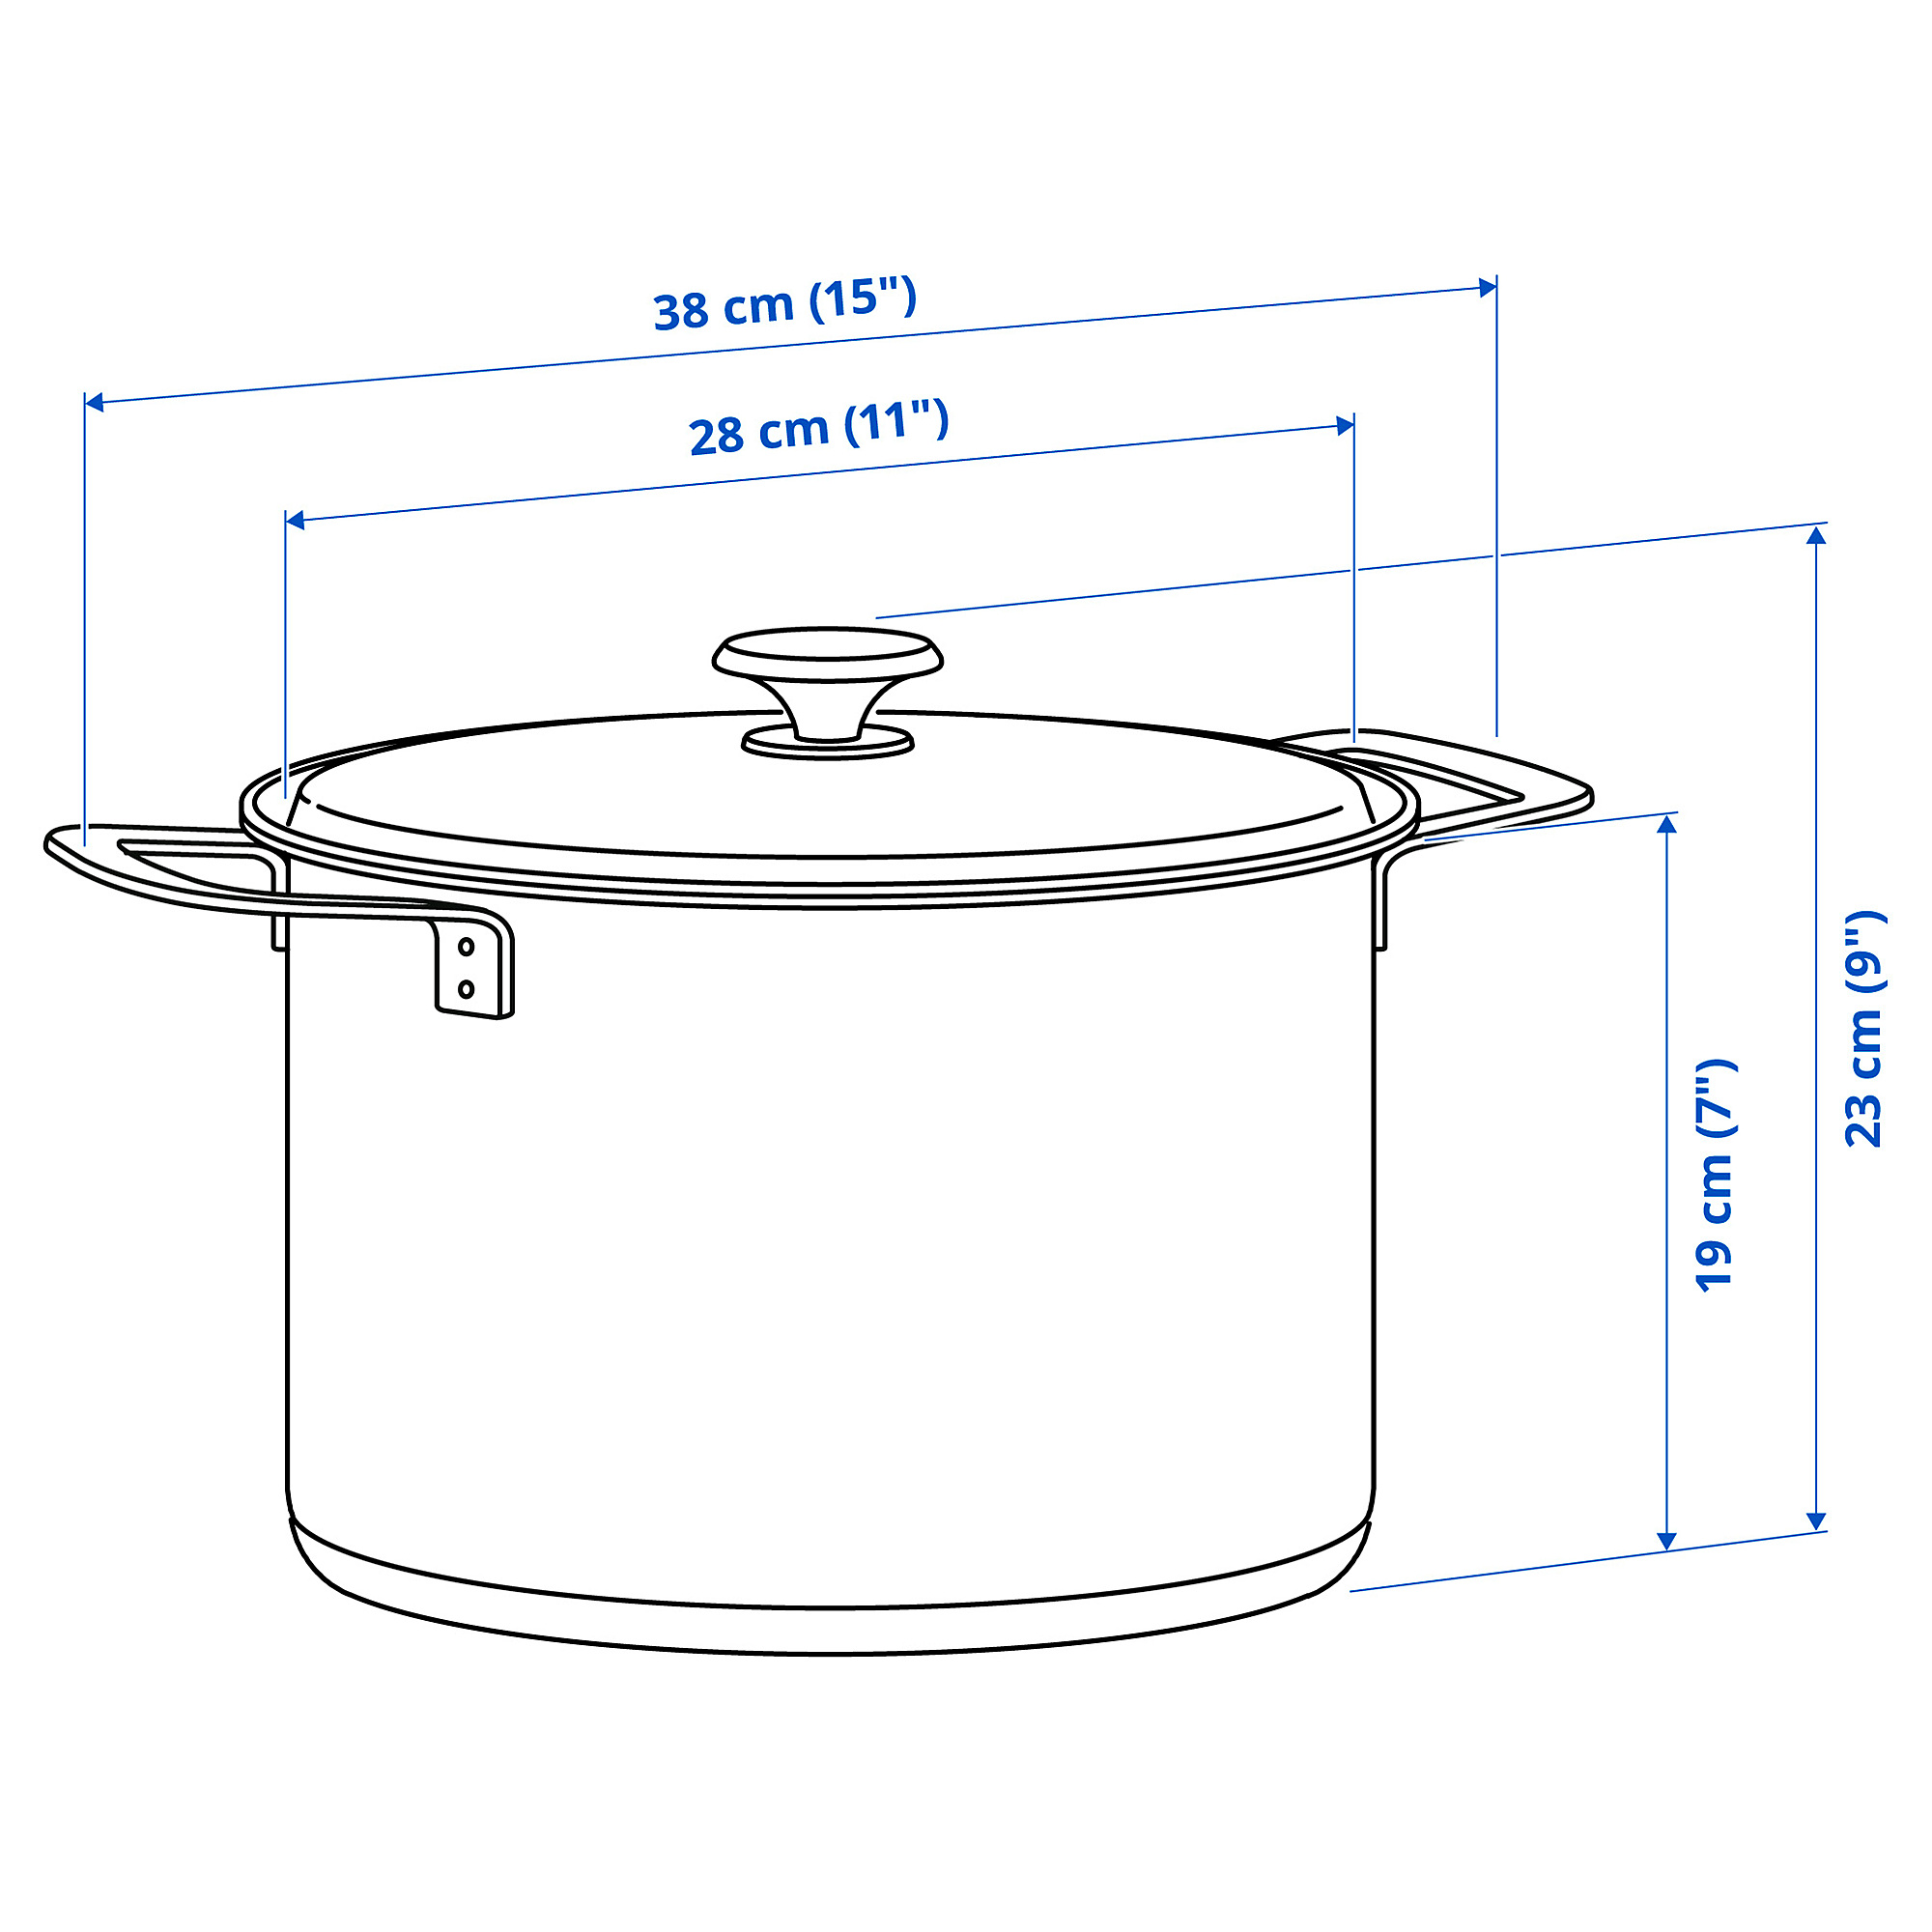 HEMKOMST pot with lid